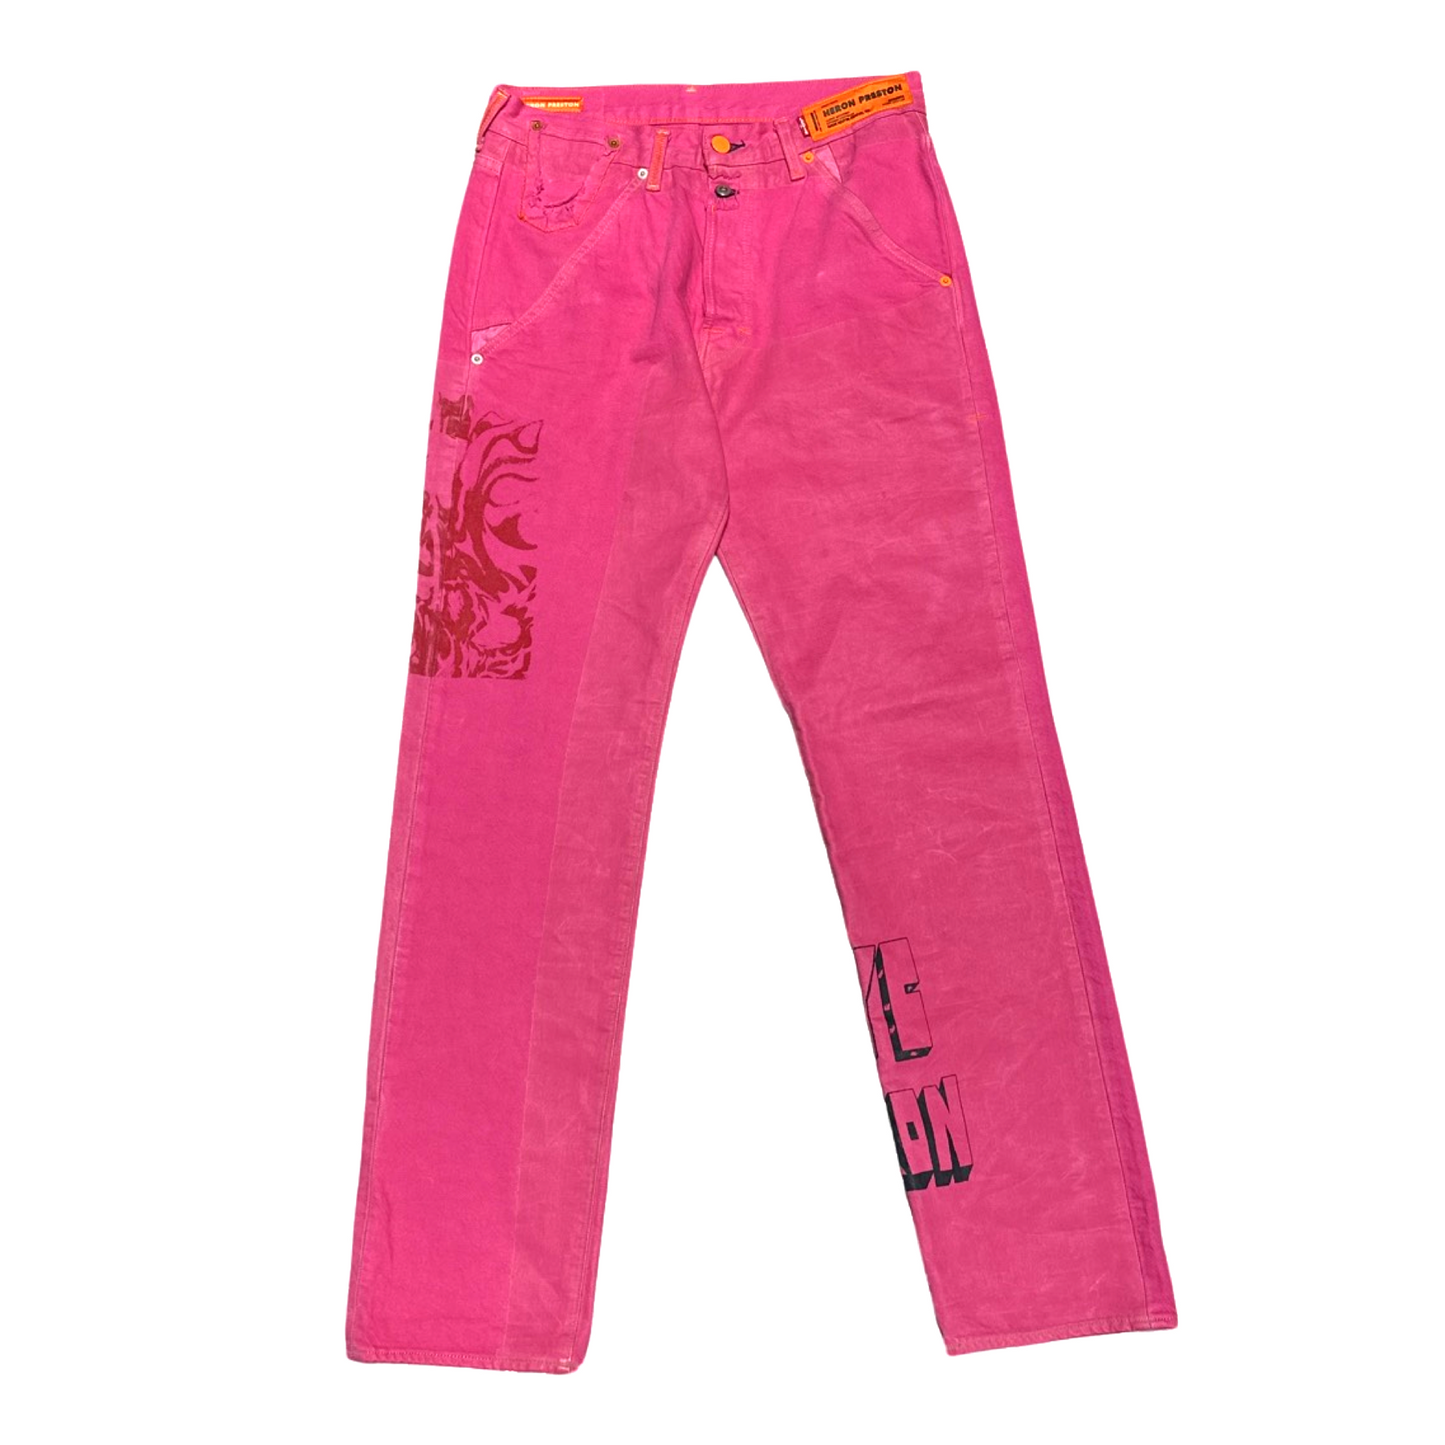 Levi's x Heron Preston 501 Pink Jeans (C)